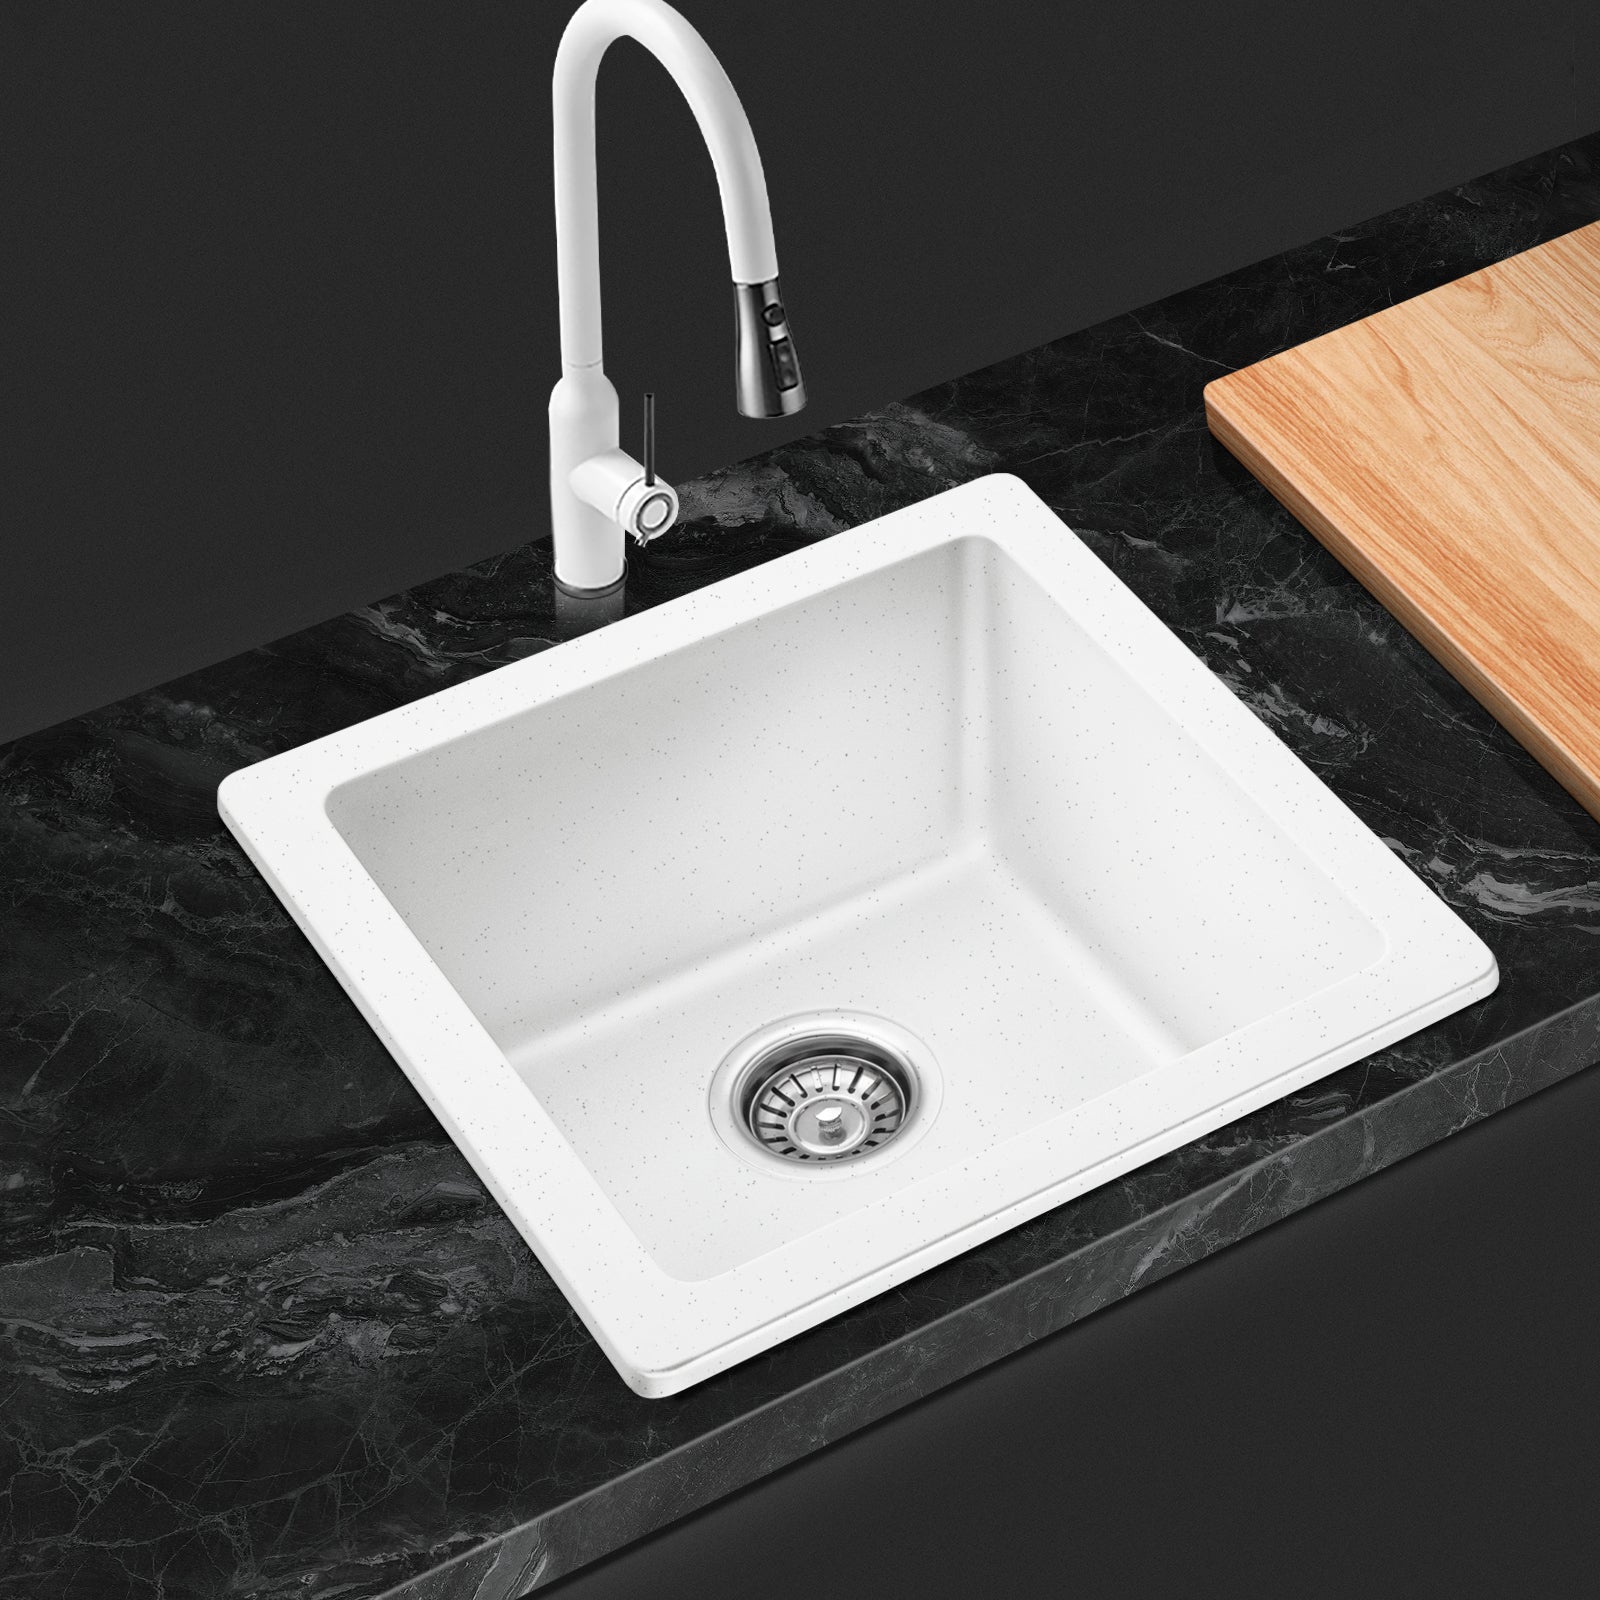 ACA Granite Stone Single Bowl Laundry White Kitchen Sink Top/Undermount Basin 422.77x422.77mm